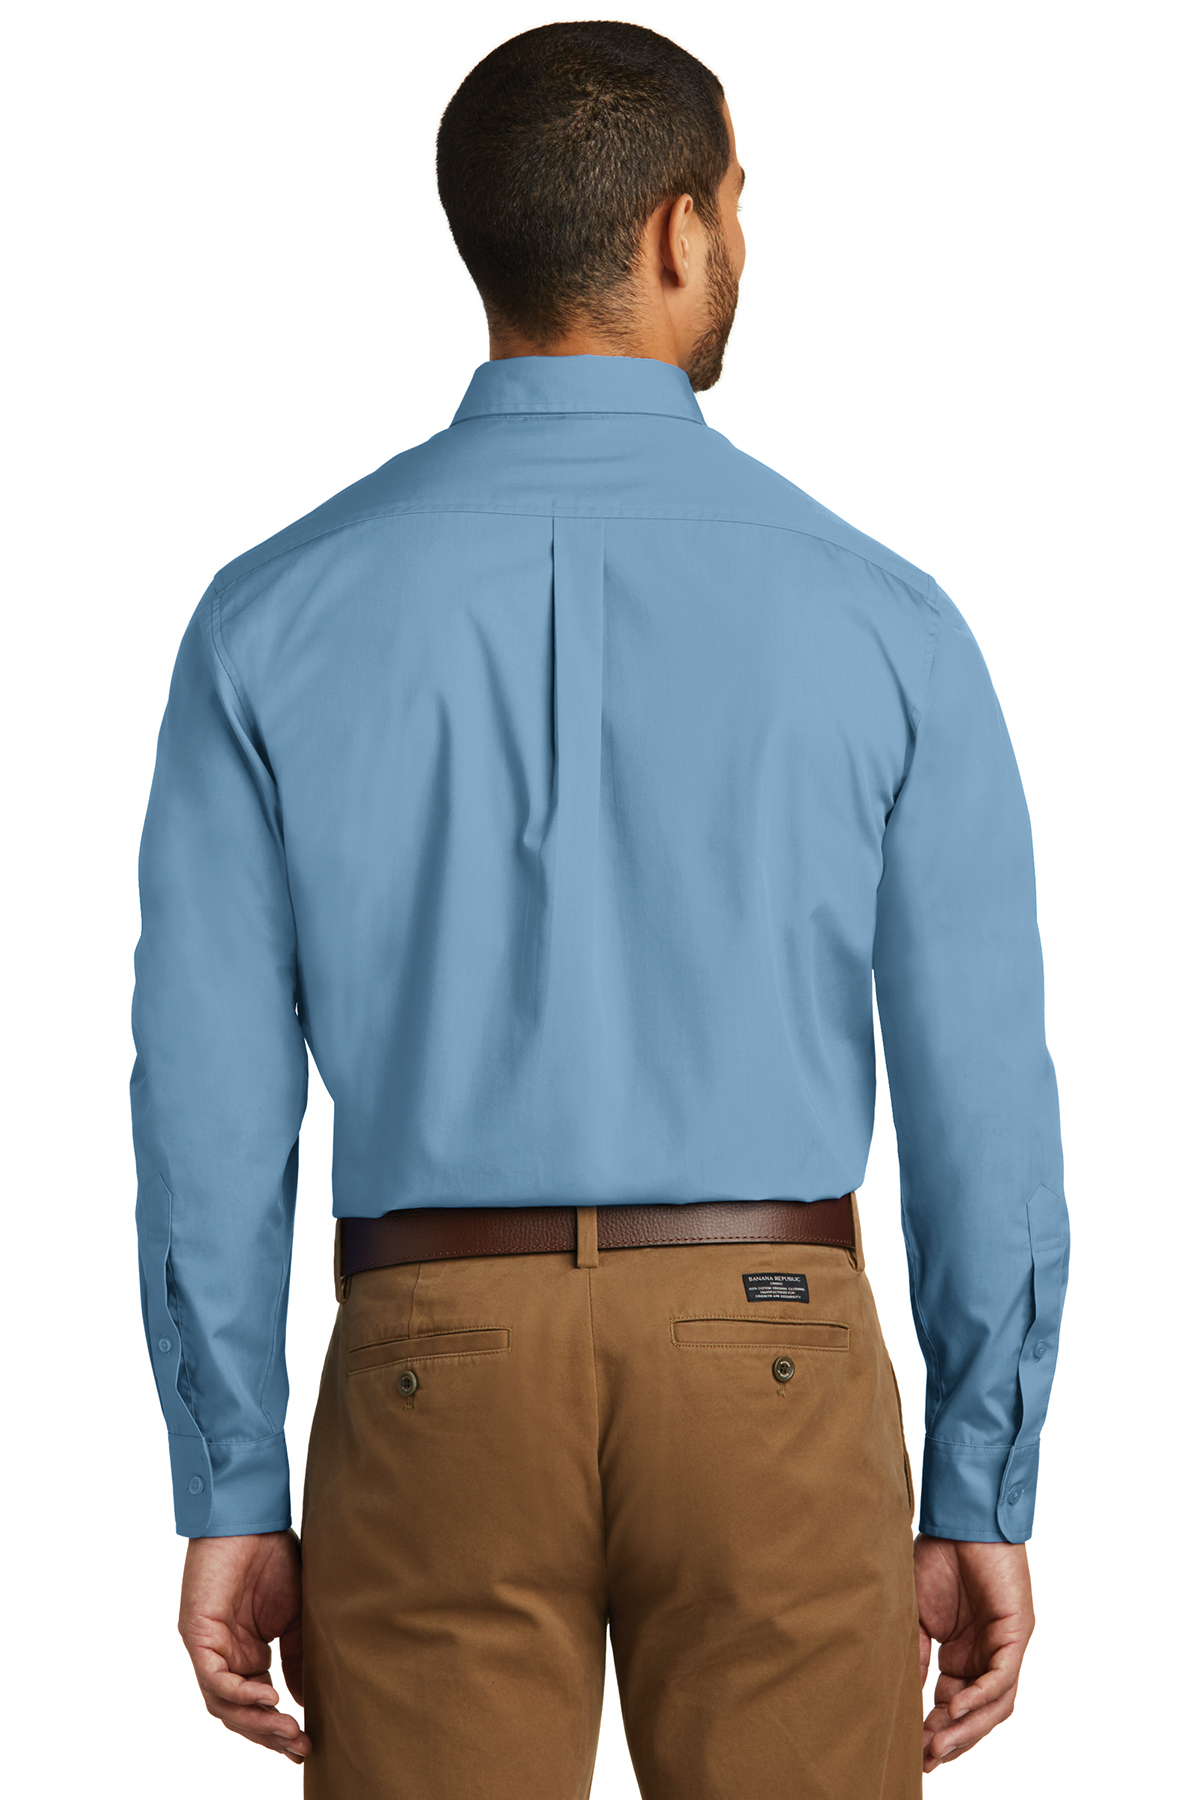 Port Authority Men's Long Sleeve Carefree Poplin Shirt, Burgundy, XX-Large